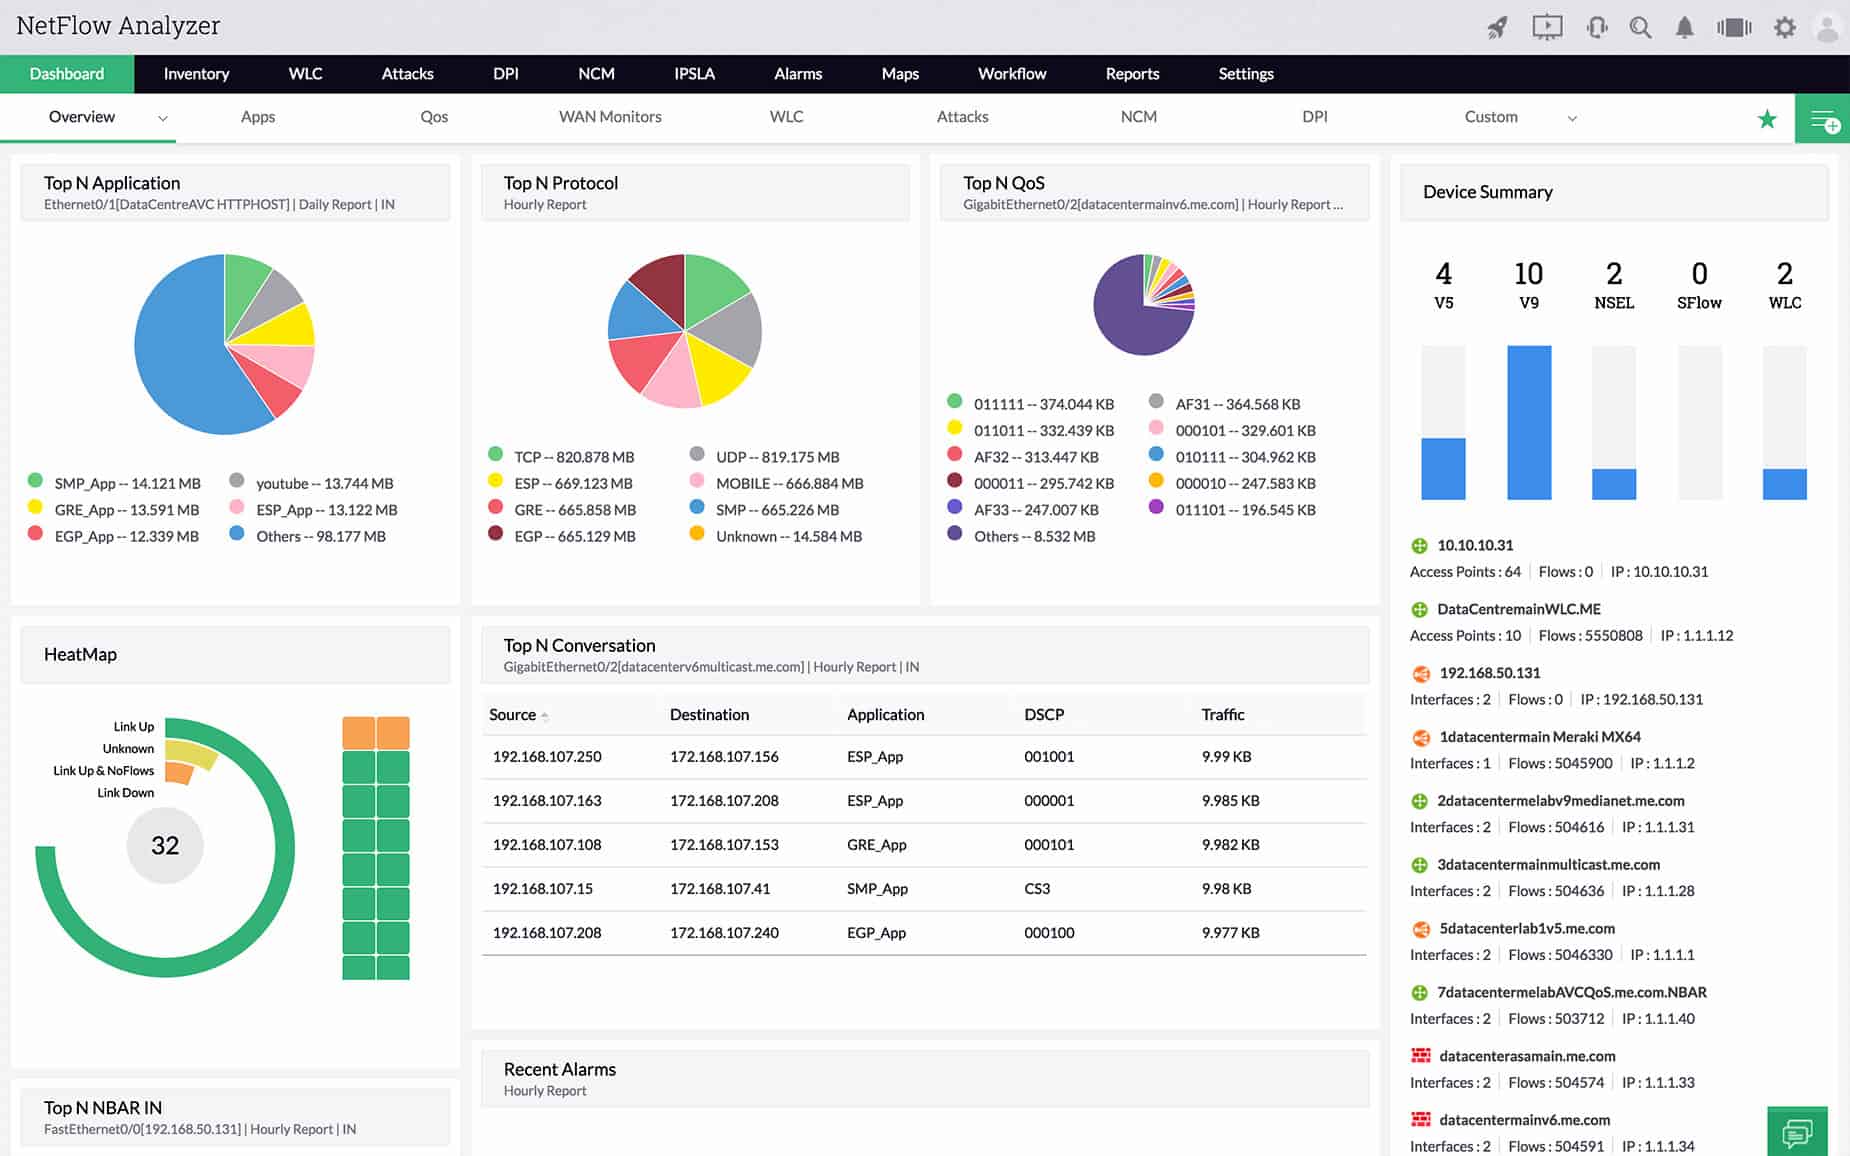 ManageEngine NetFlow Analyzer Dashboard Overview